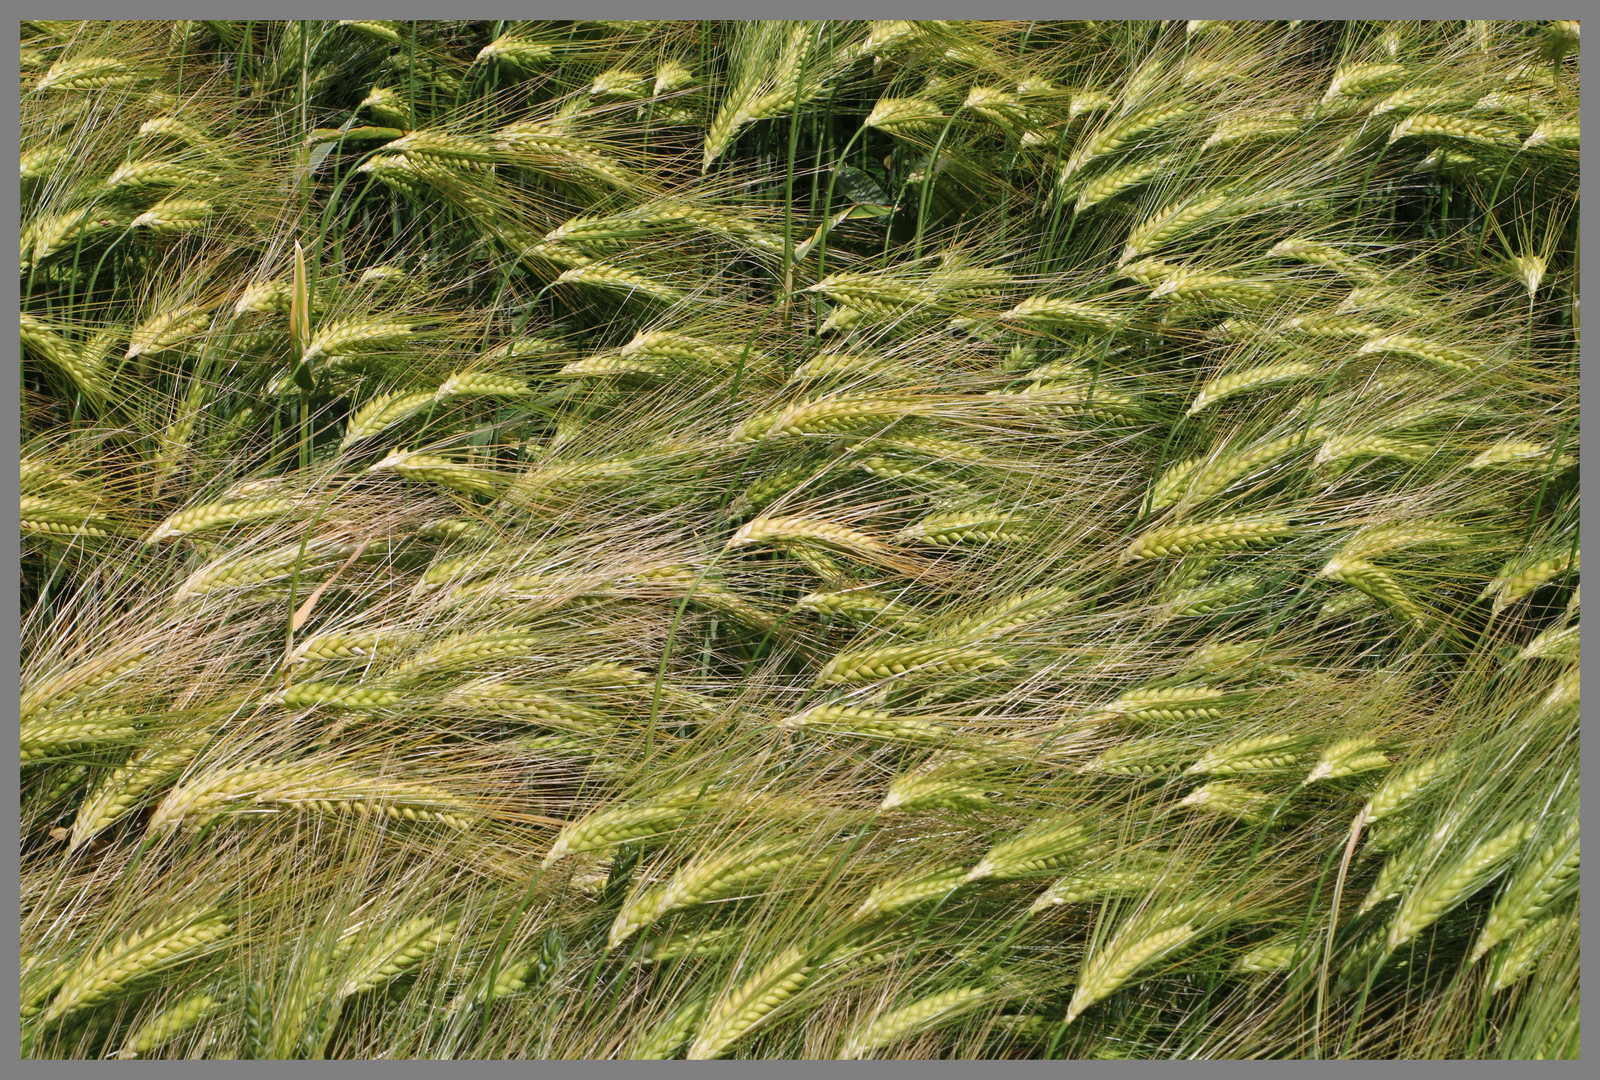 barley near alnmouth Northumberland